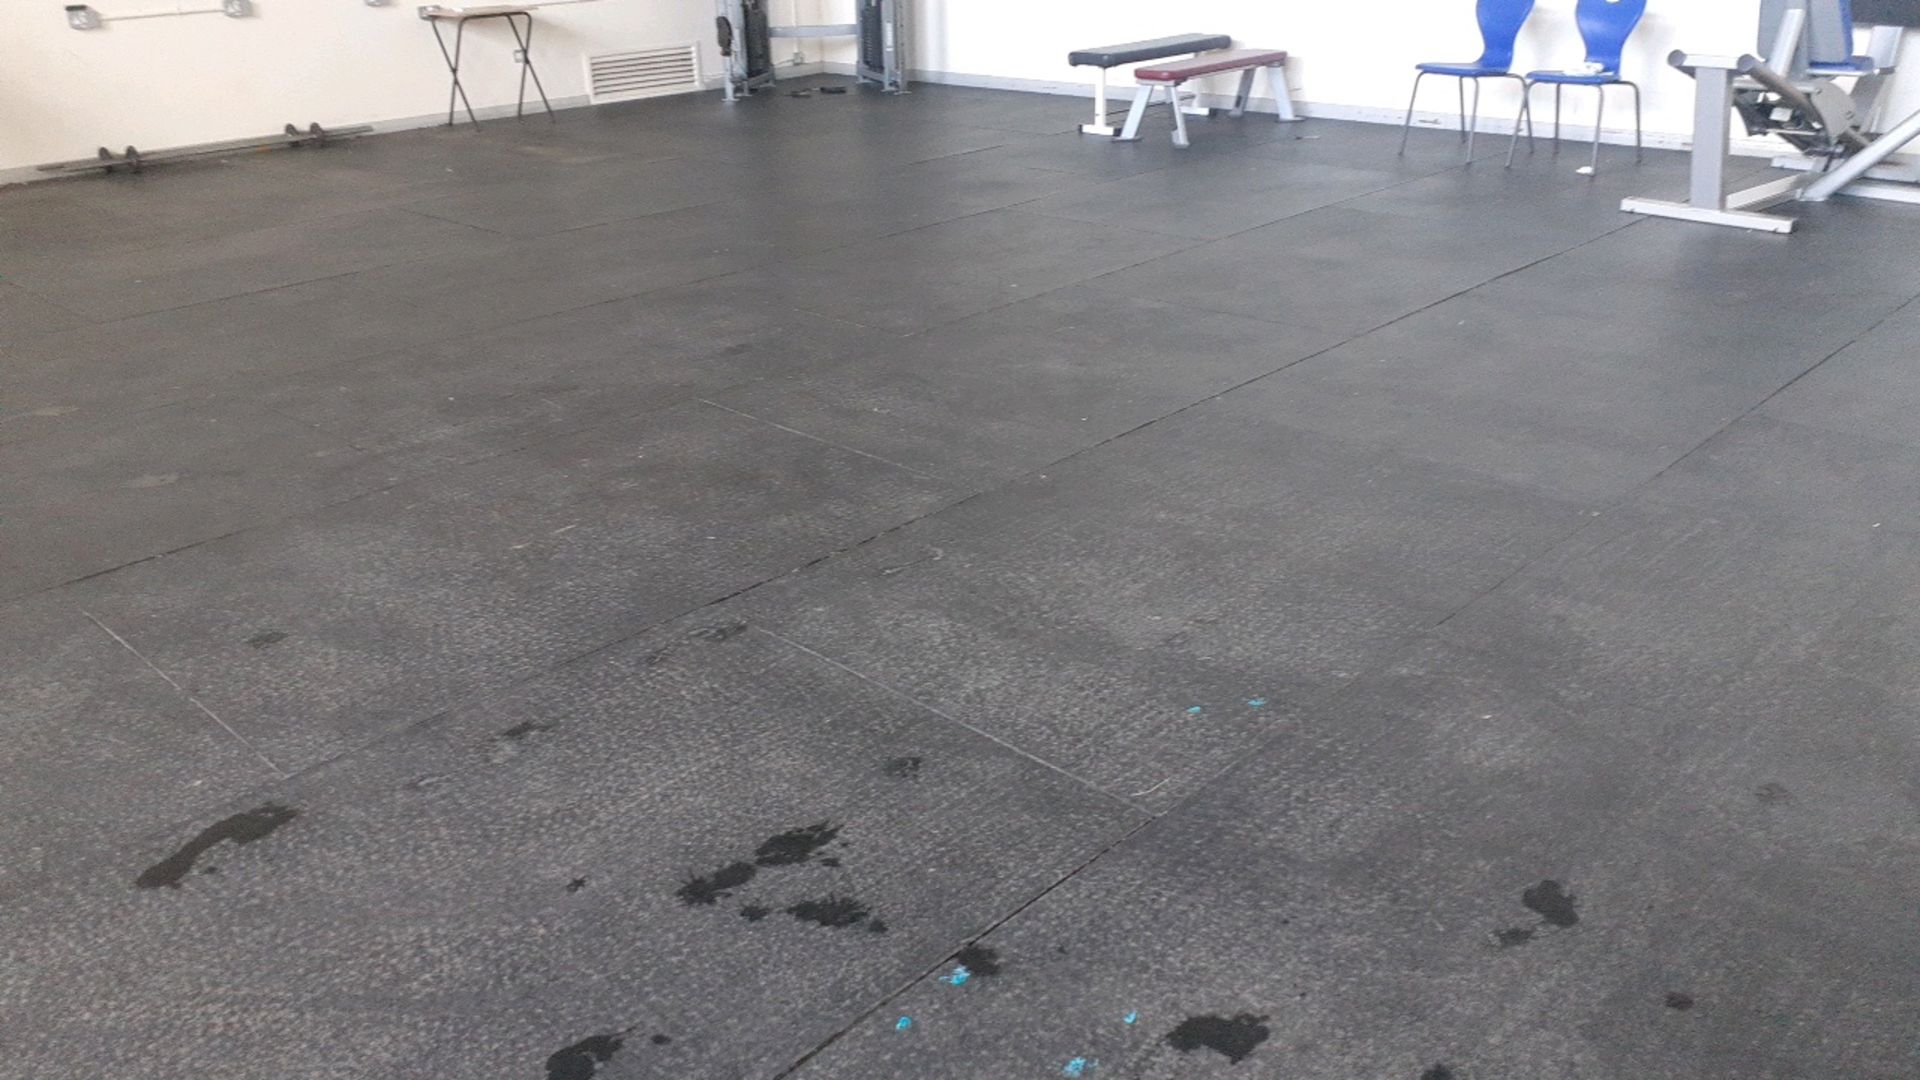 Gym floor